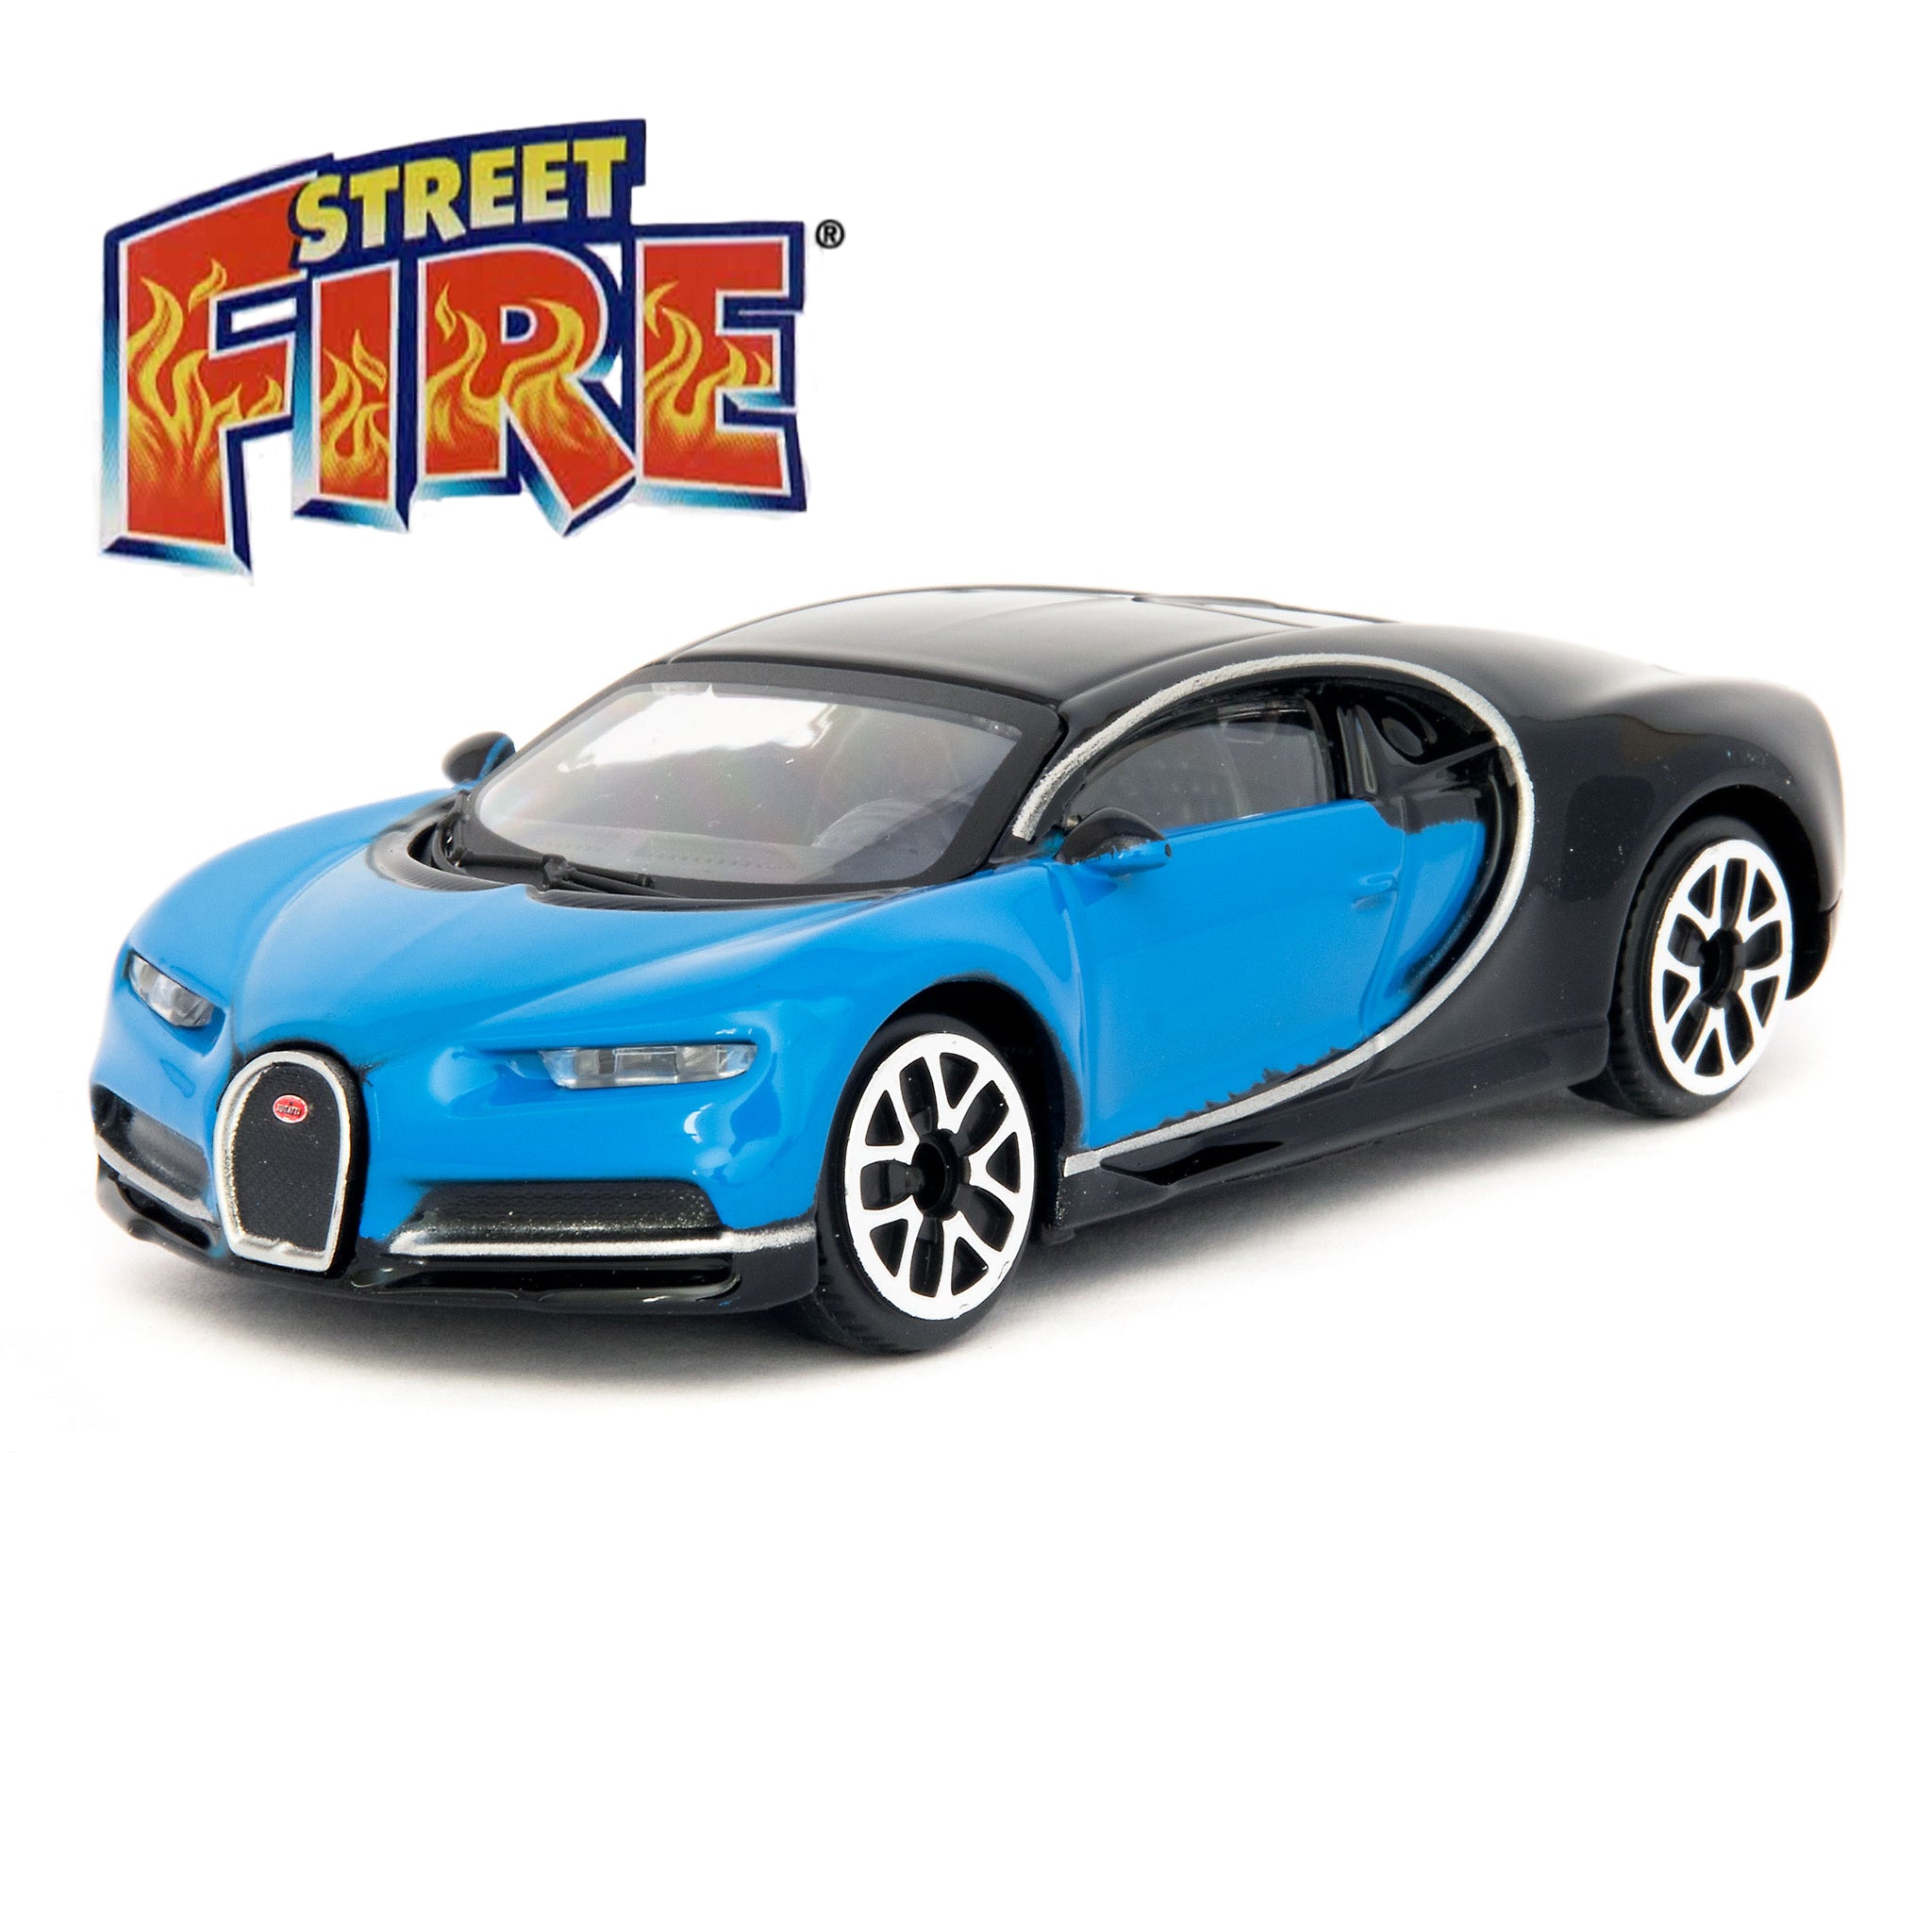 Bugatti Chiron Diecast Toy Car blue - 1:43 Scale